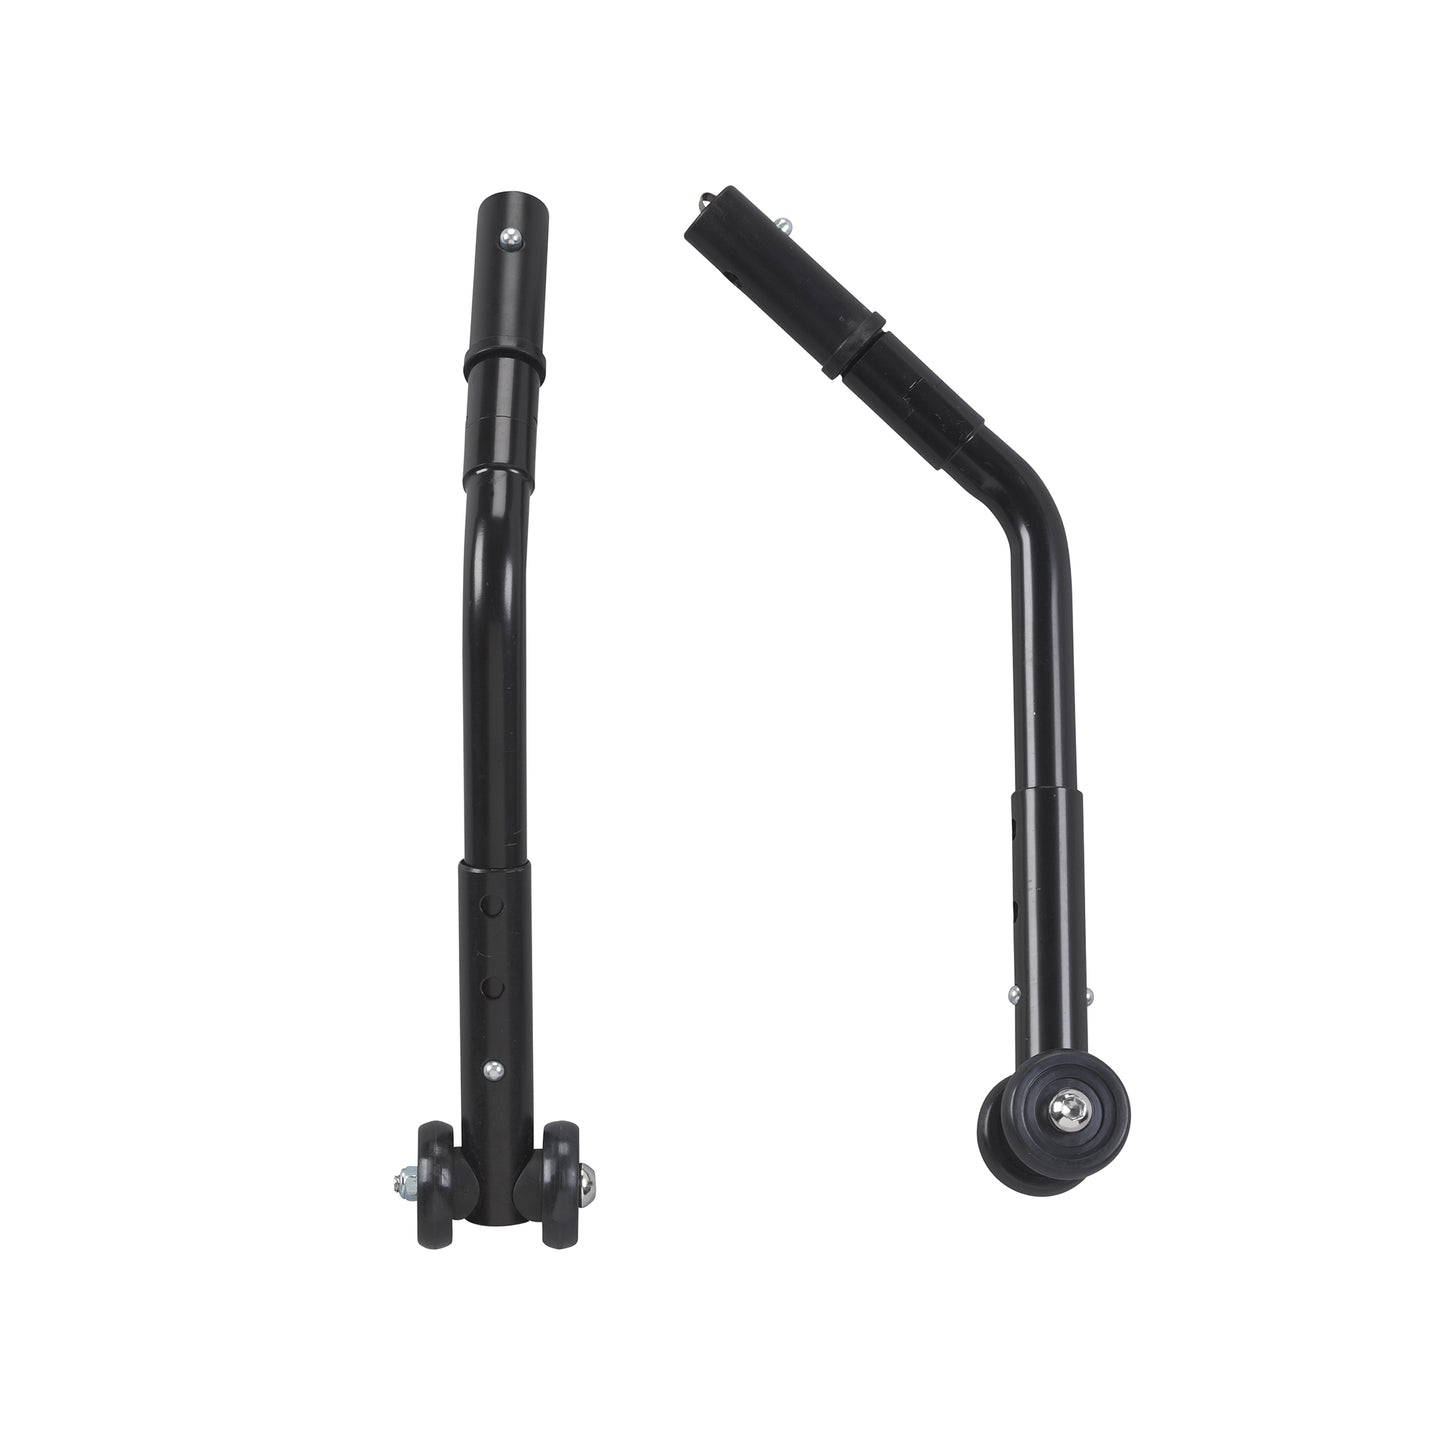 Adjustable Universal Wheelchair Anti Tipper with Wheels, Black, 1 Pair